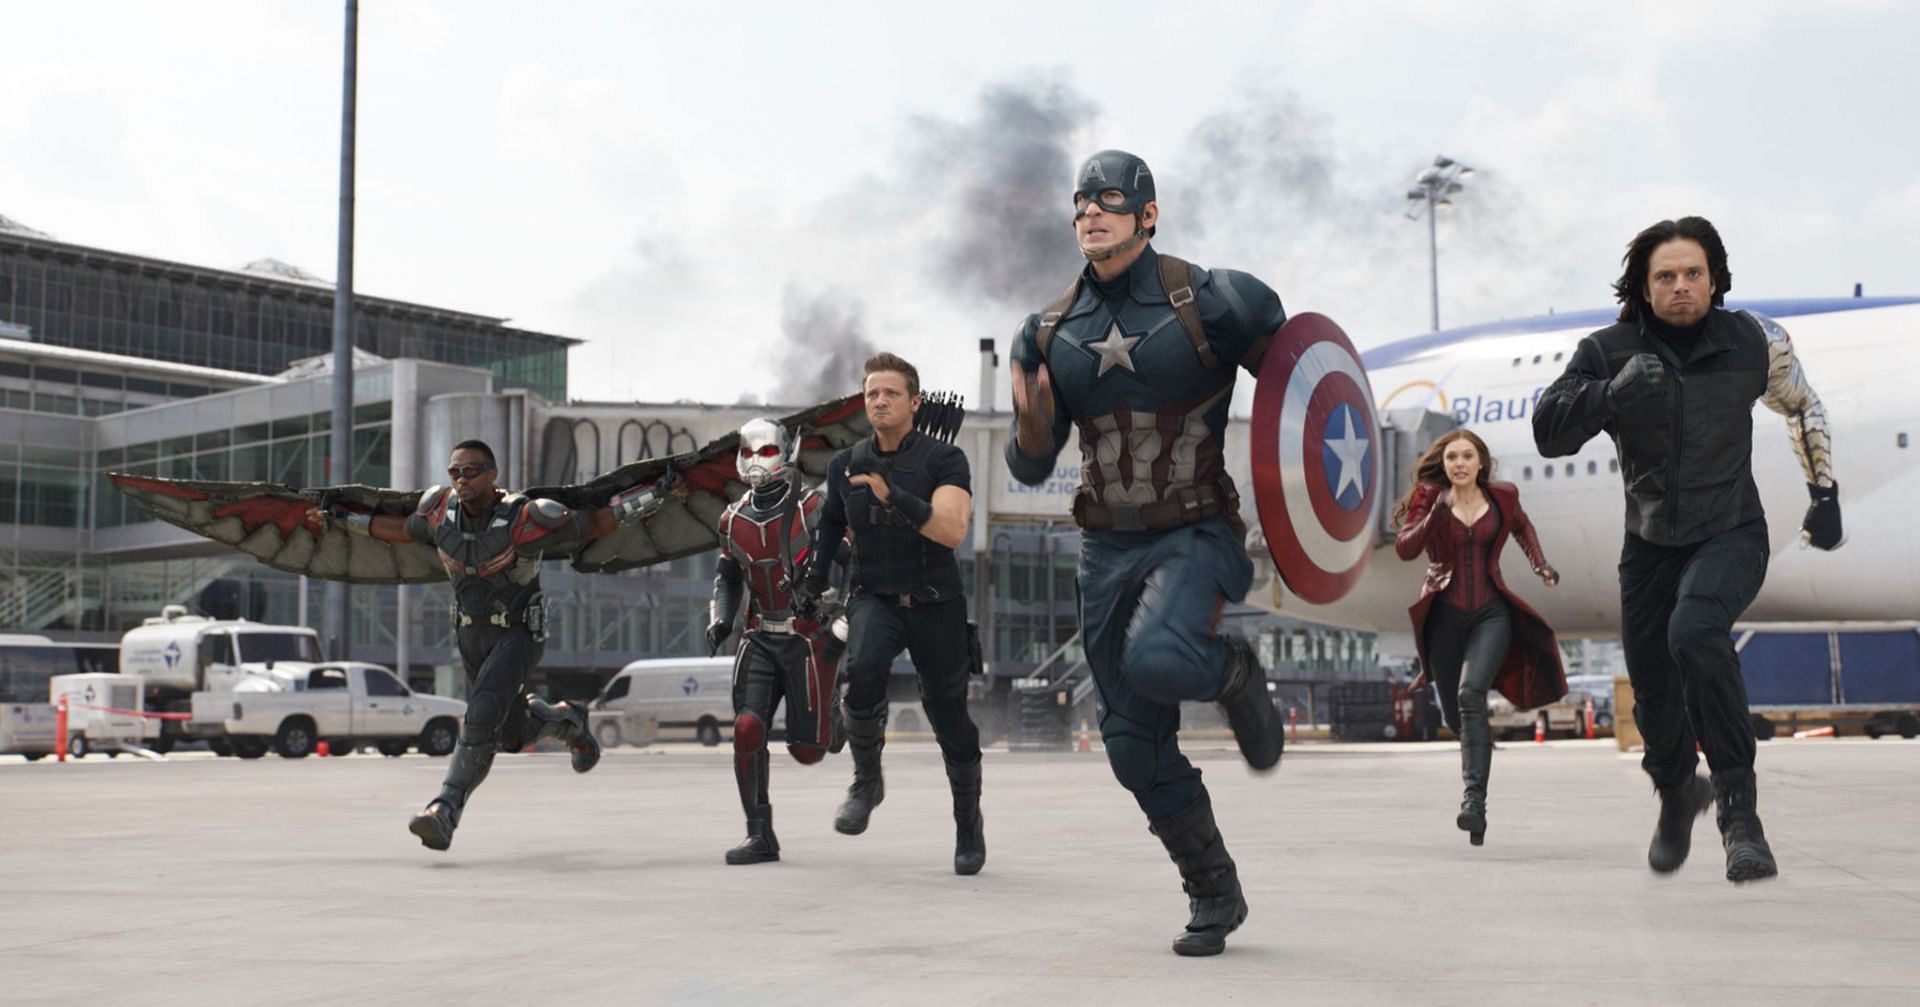 Airport battle scene from Captain America: Civil War (image via IMDB)